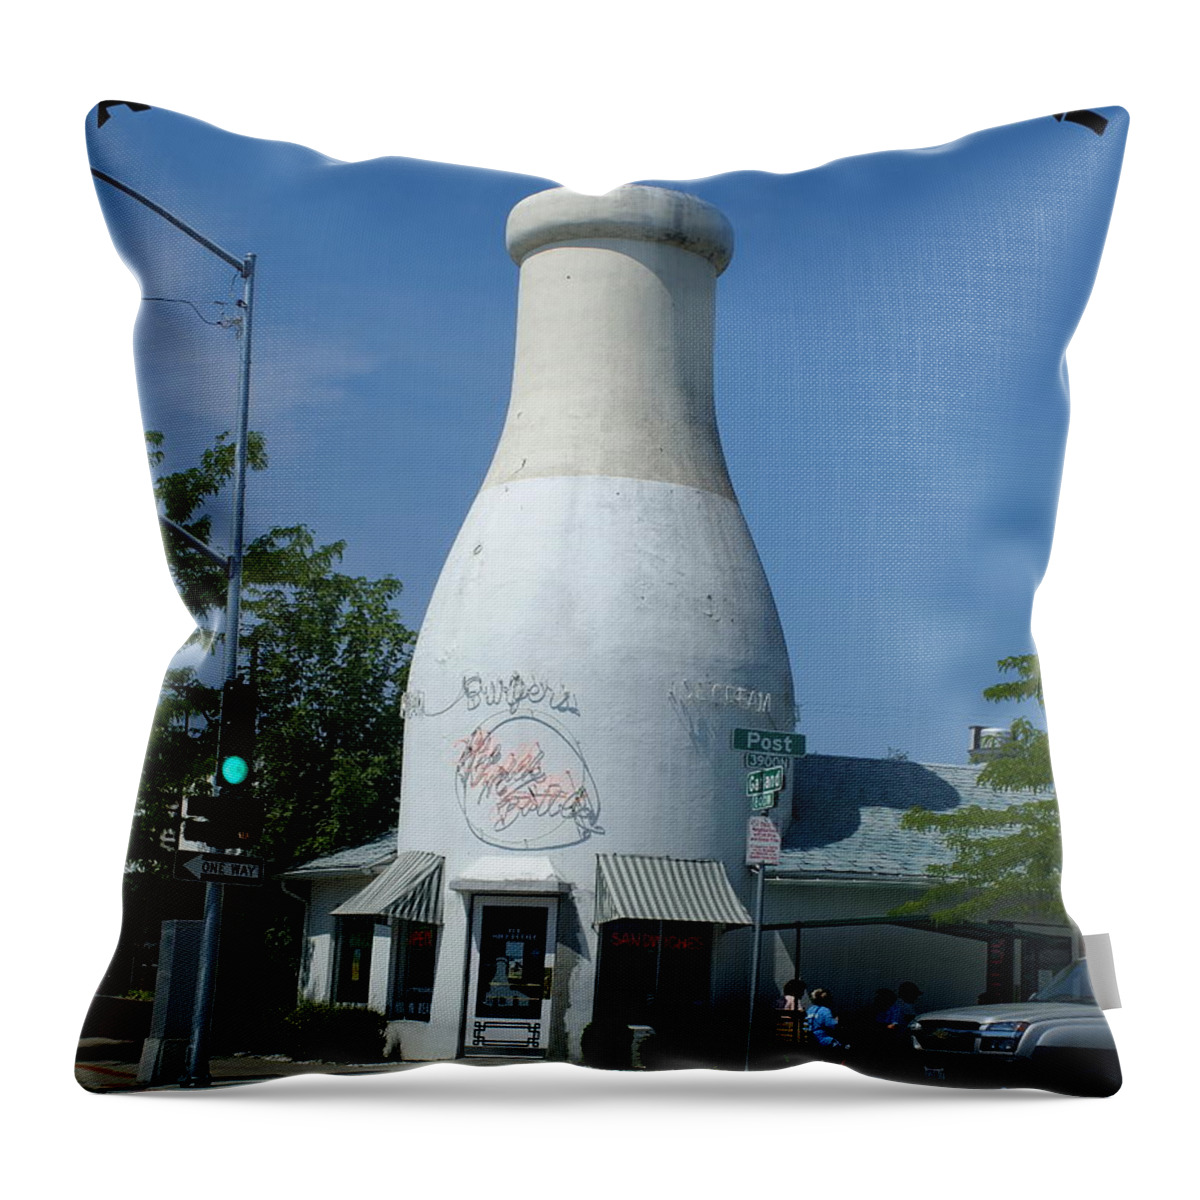 Spokane Throw Pillow featuring the photograph A Giant Milk Bottle in Spokane by Ben Upham III